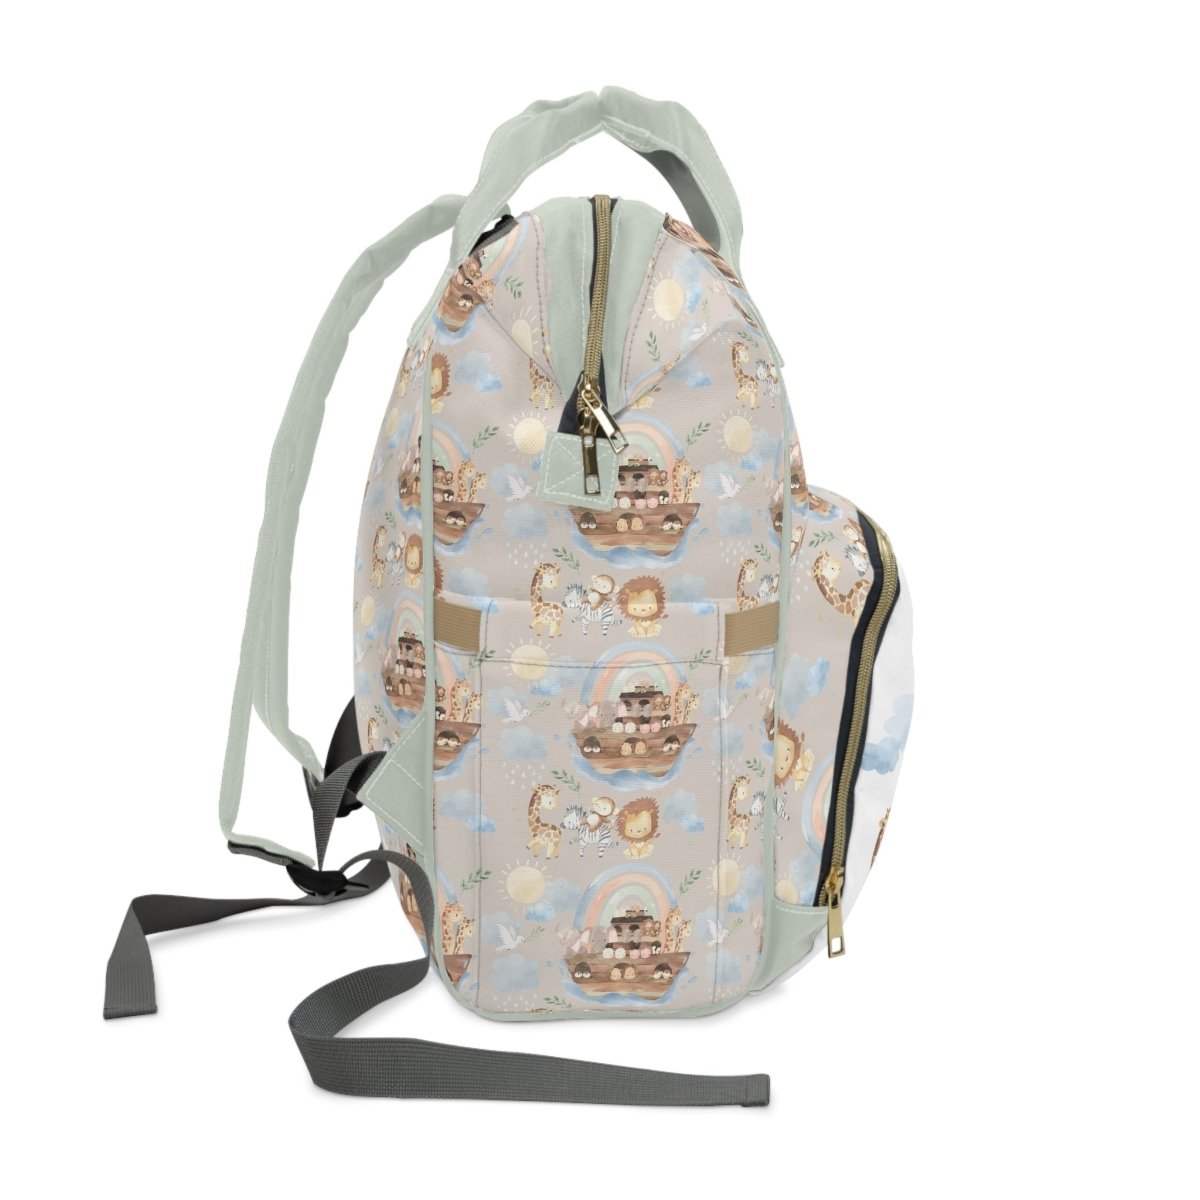 Noah's Ark Personalized Backpack Diaper Bag - gender_boy, Noah's Ark, text